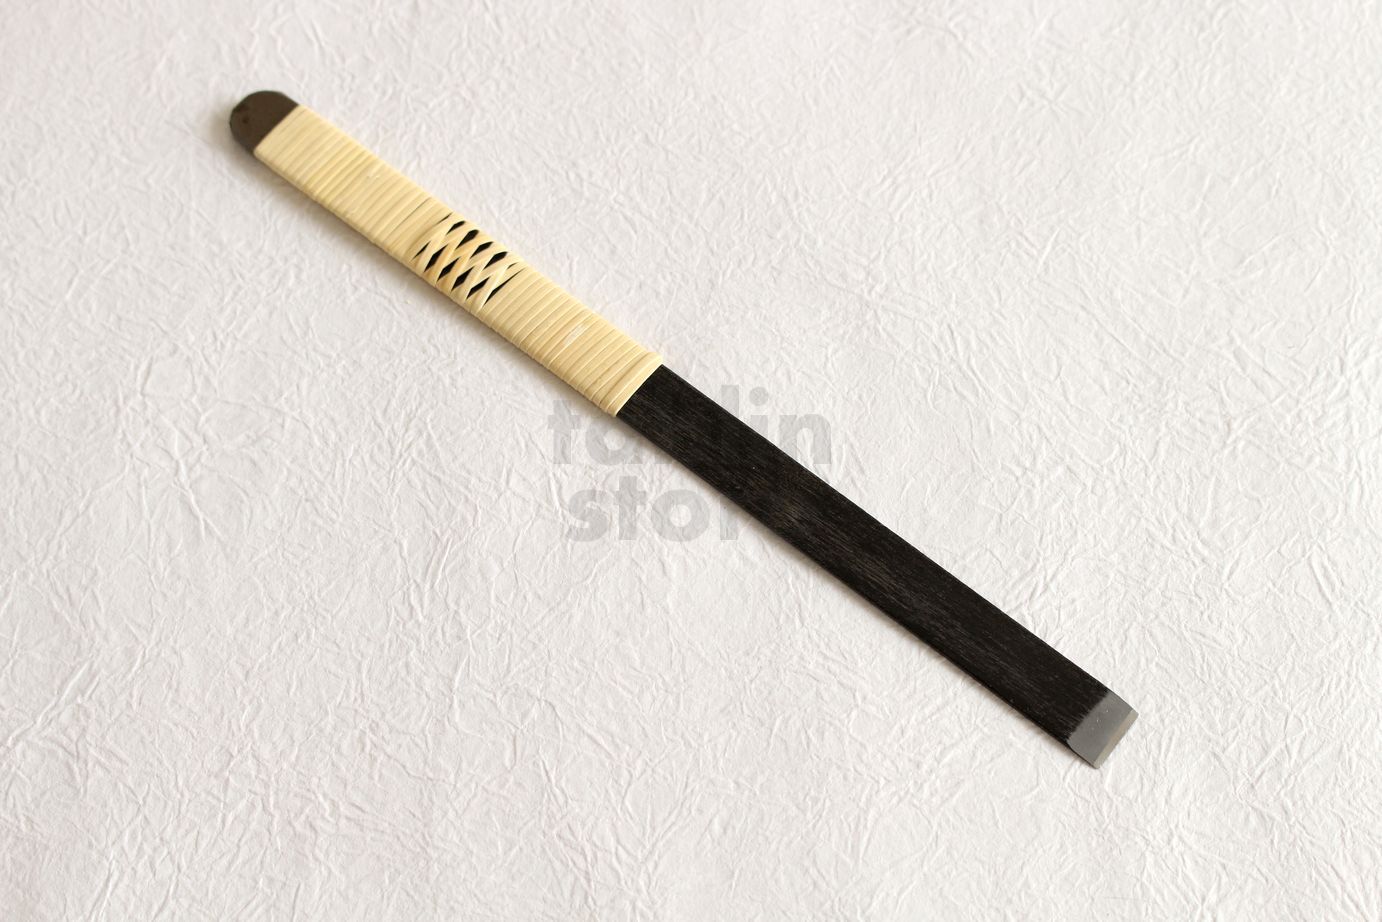 Kiridashi knife Japanese kogatana Woodworking Okeya Yasuki white 2 steel BW  21mm - tablinstore